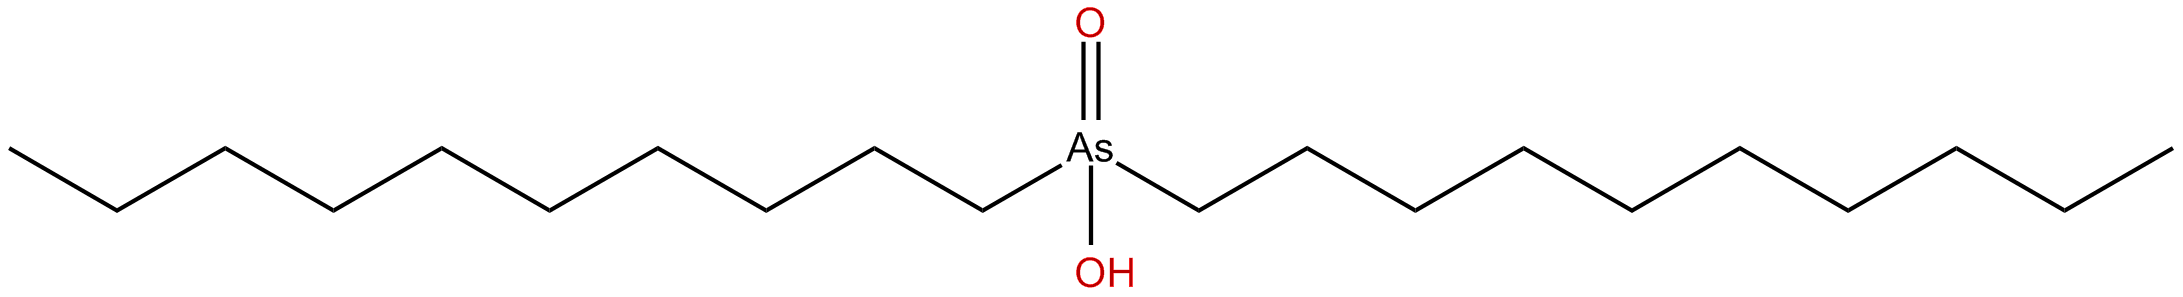 Image of didecylhydroxy arsine oxide